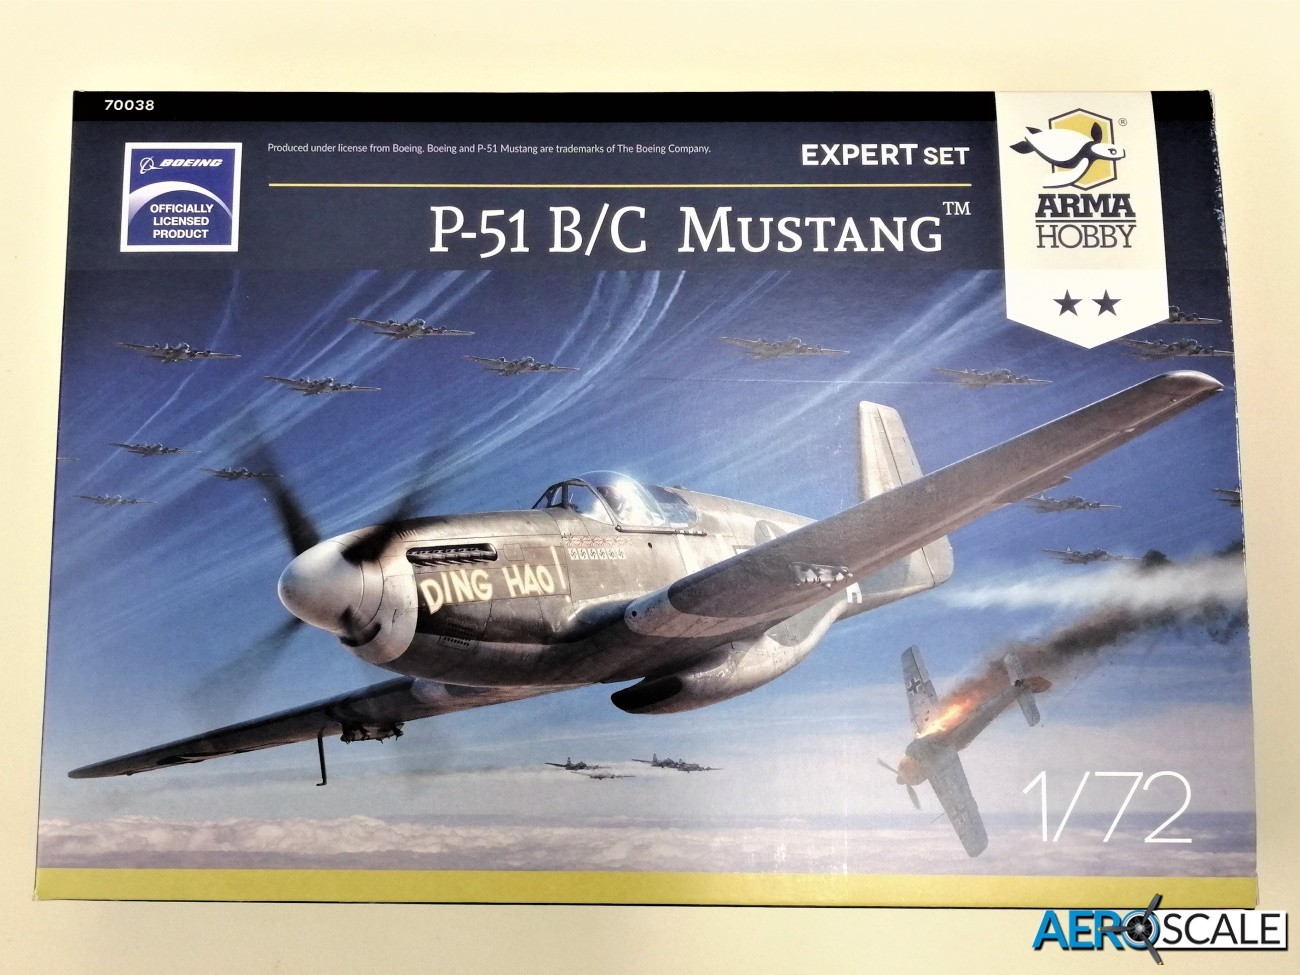 Arma Hobby 1/72 scale P-51B/C Mustang plastic model kit review